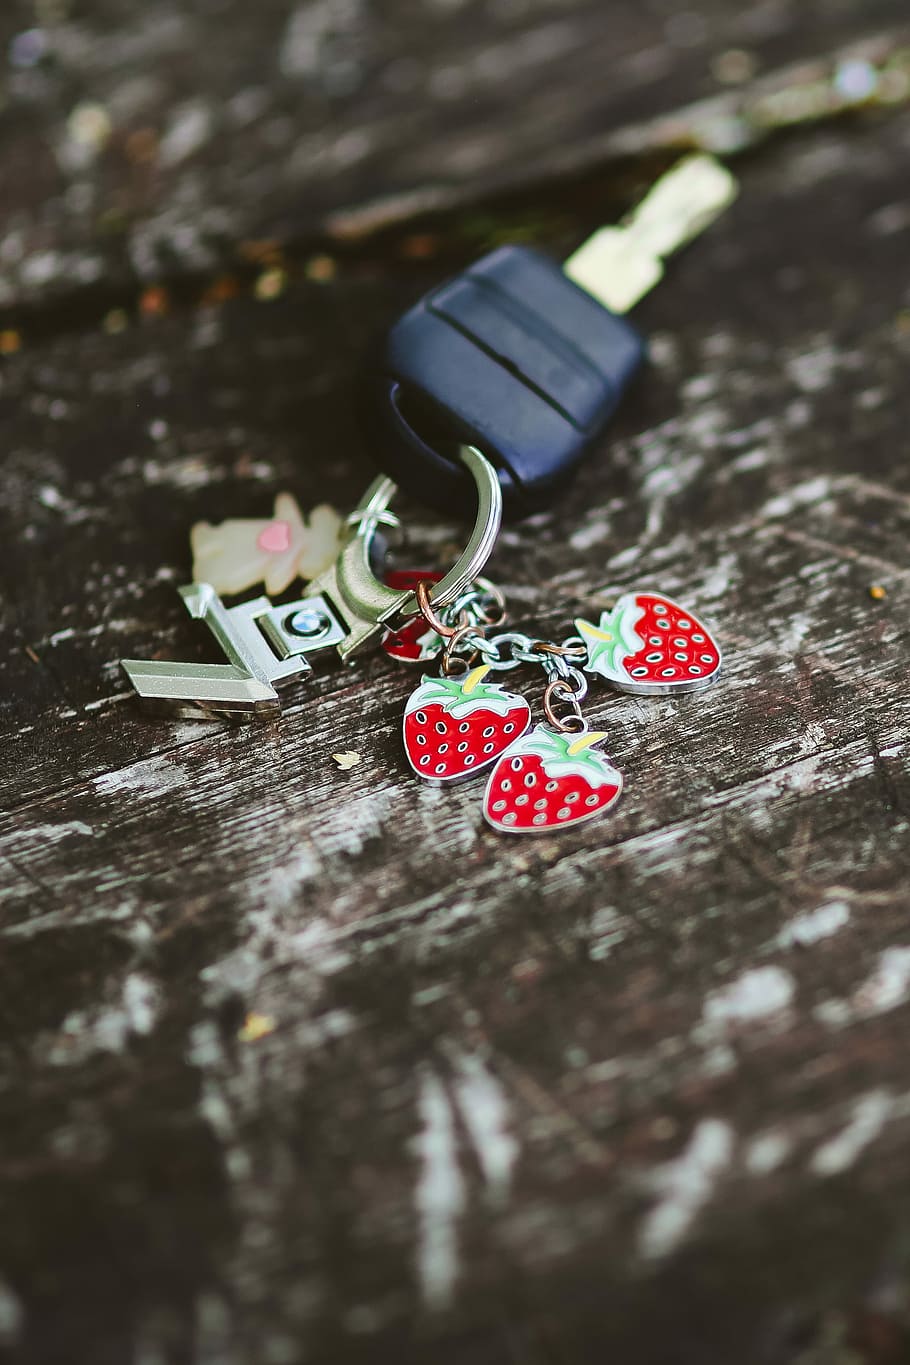 key, ring, strawberries, key ring, wooden, wood, car key, wood - Material, red, heart shape